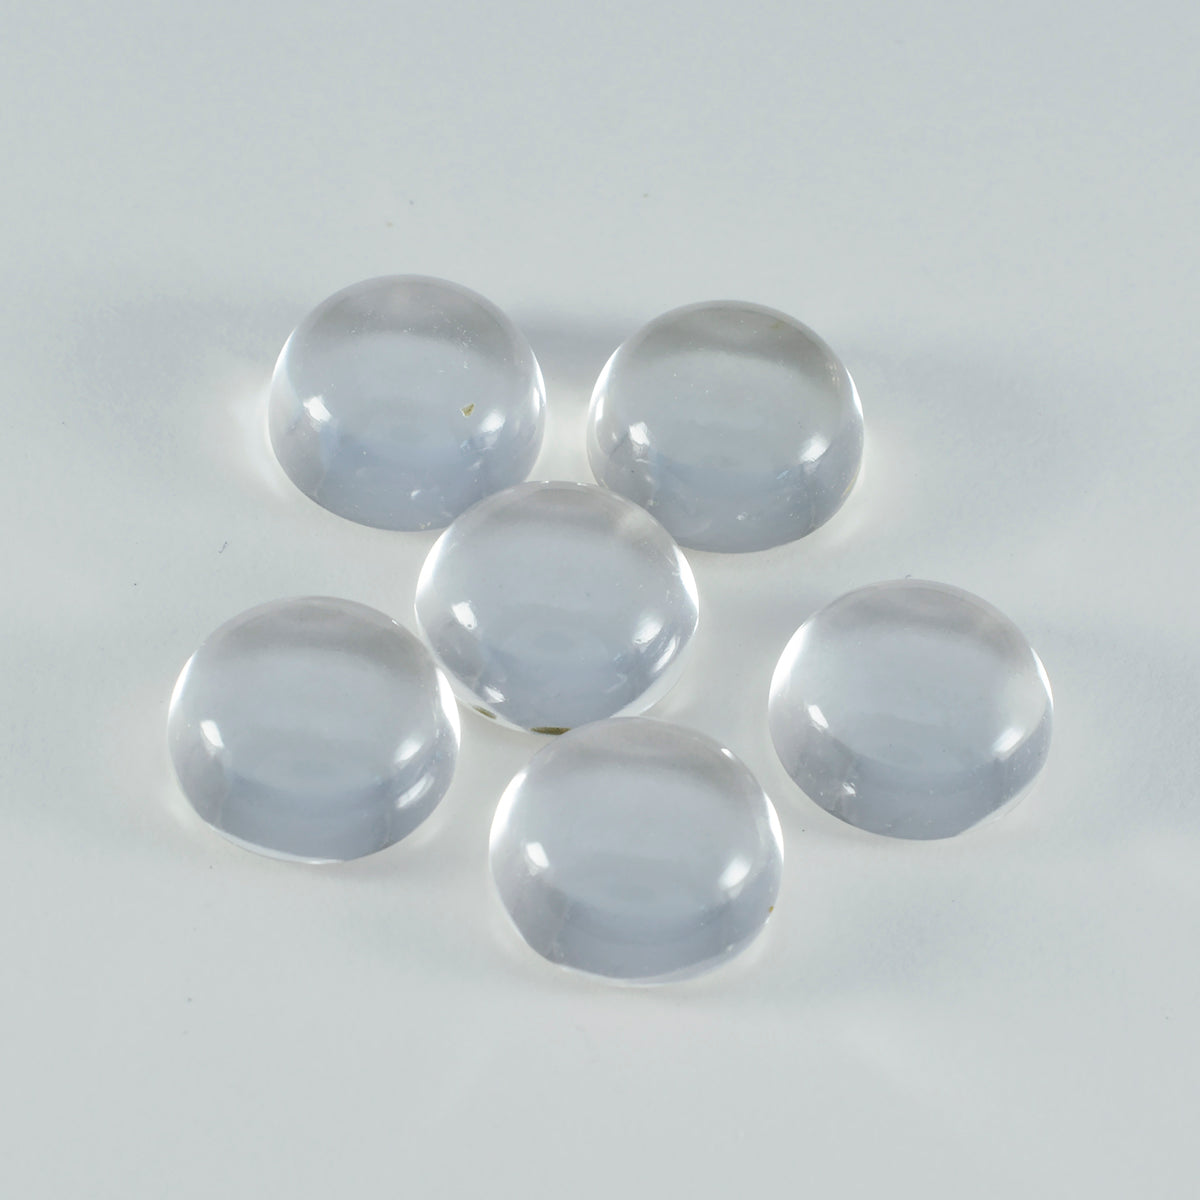 Riyogems 1PC White Crystal Quartz Cabochon 10x10 mm Round Shape Nice Quality Gemstone